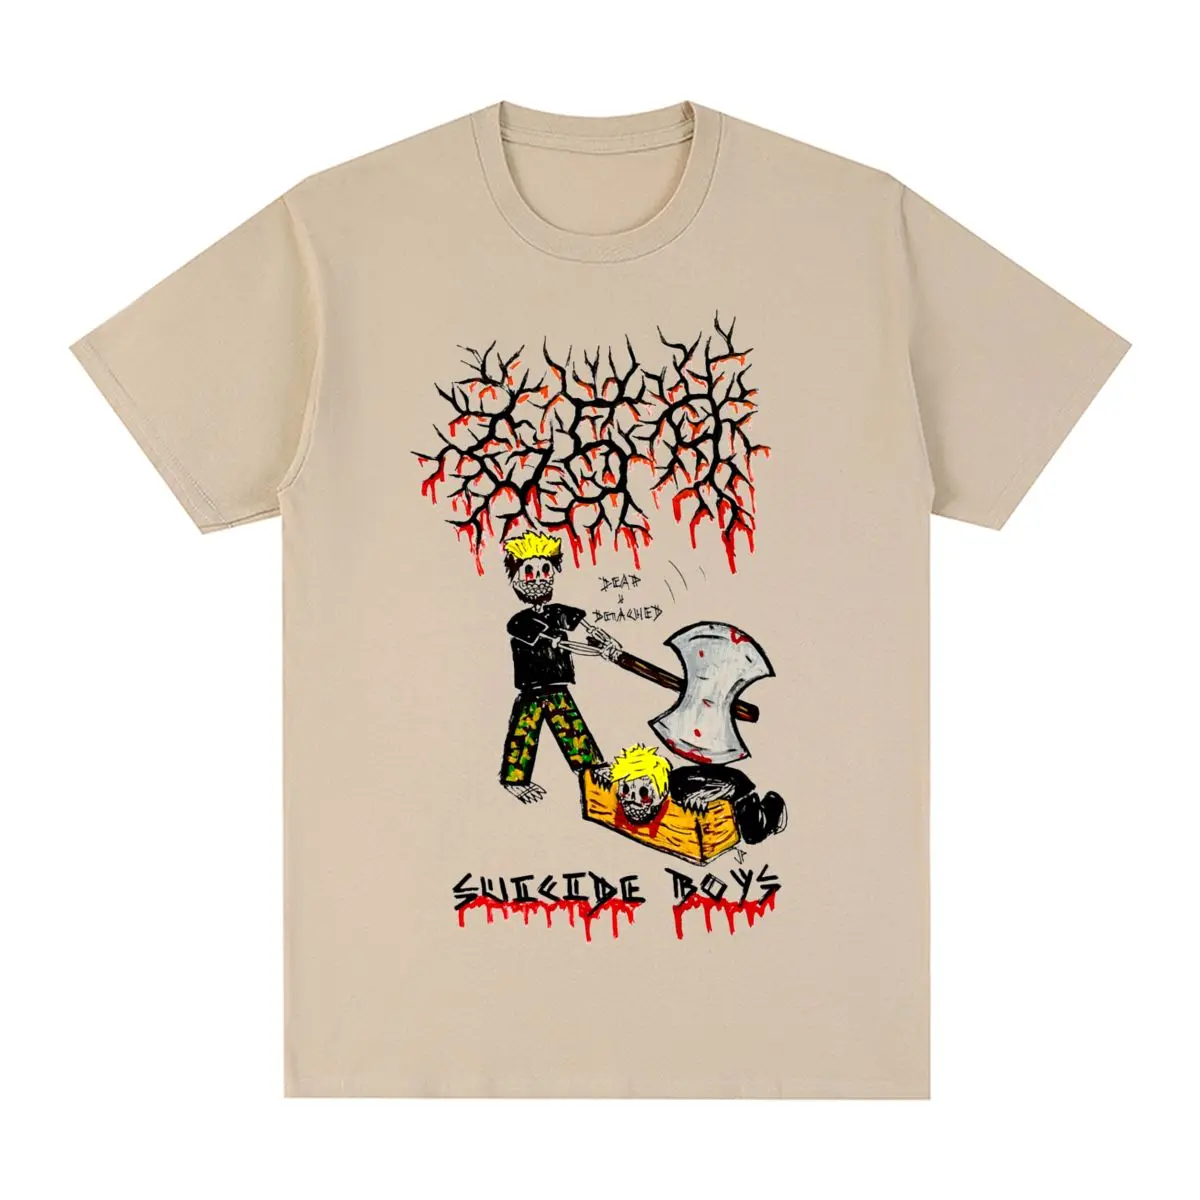 Suicide Boys $uicideboy$ Suicideboys Hip Hop Rap Vintage T-shirt Cotton Classic Cool Men T shirt New Tee Tshirt Womens Tops